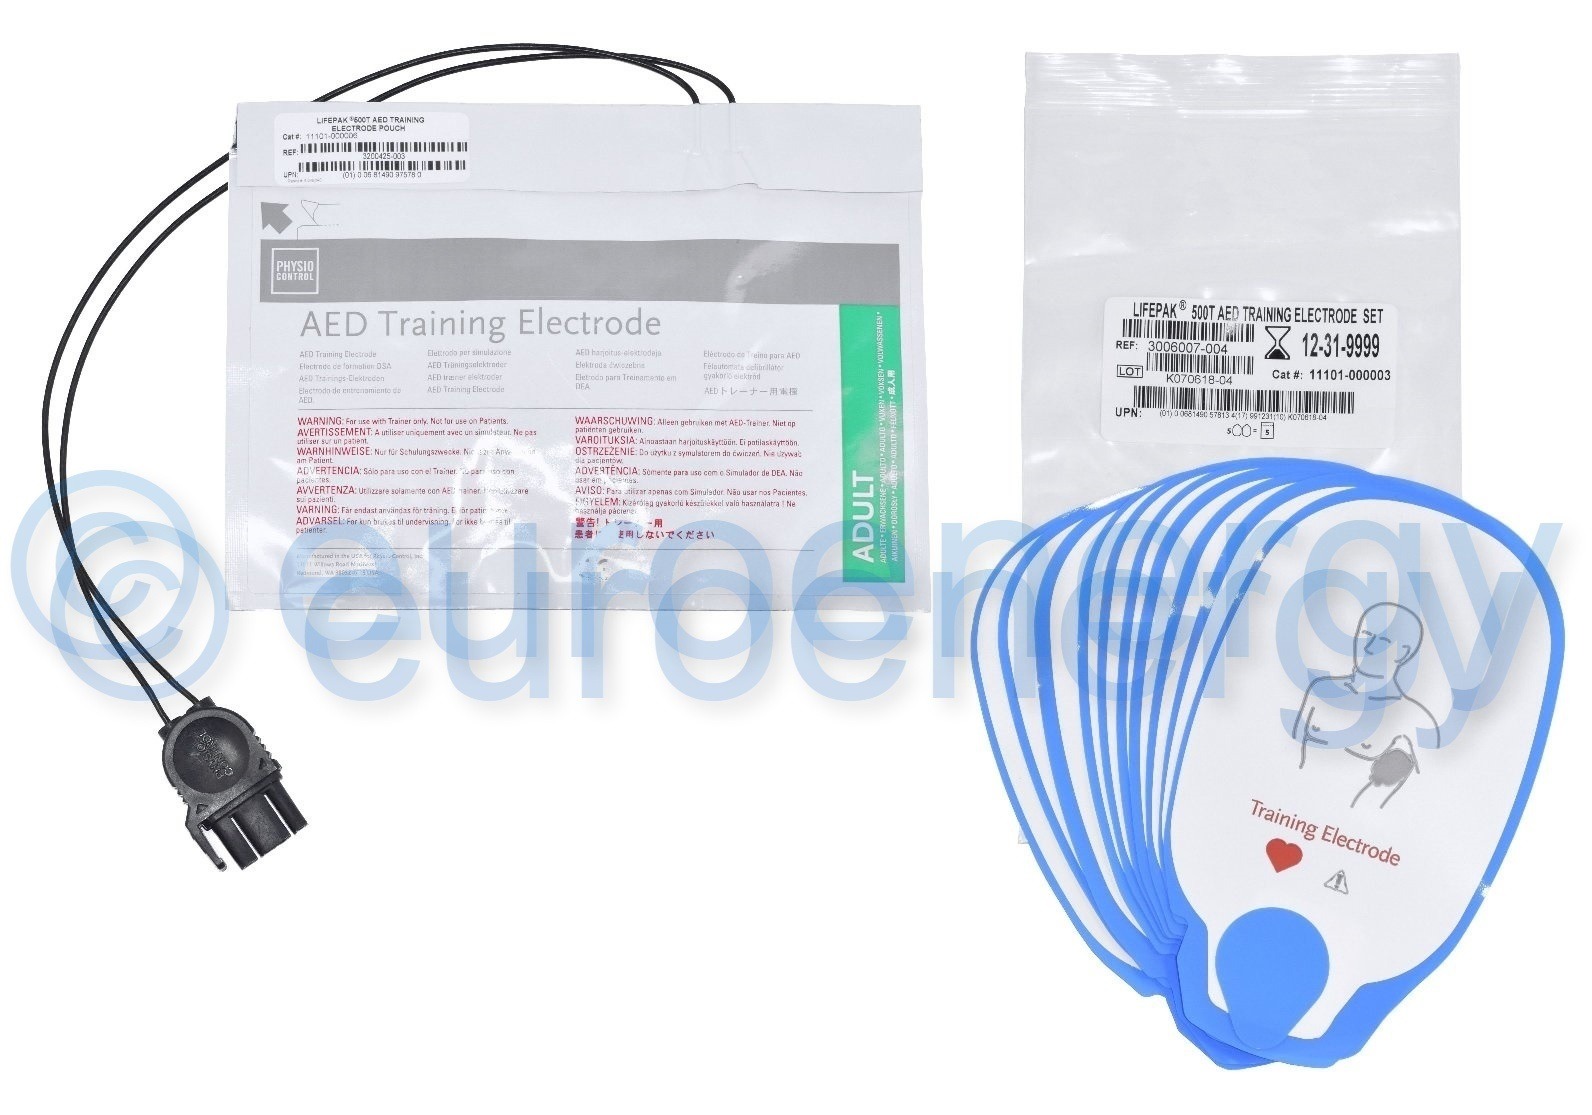 Physio Control Lifepak 1000 AED Training Electrode Set 5 pairs 11101-000004 Original Medical Accessory